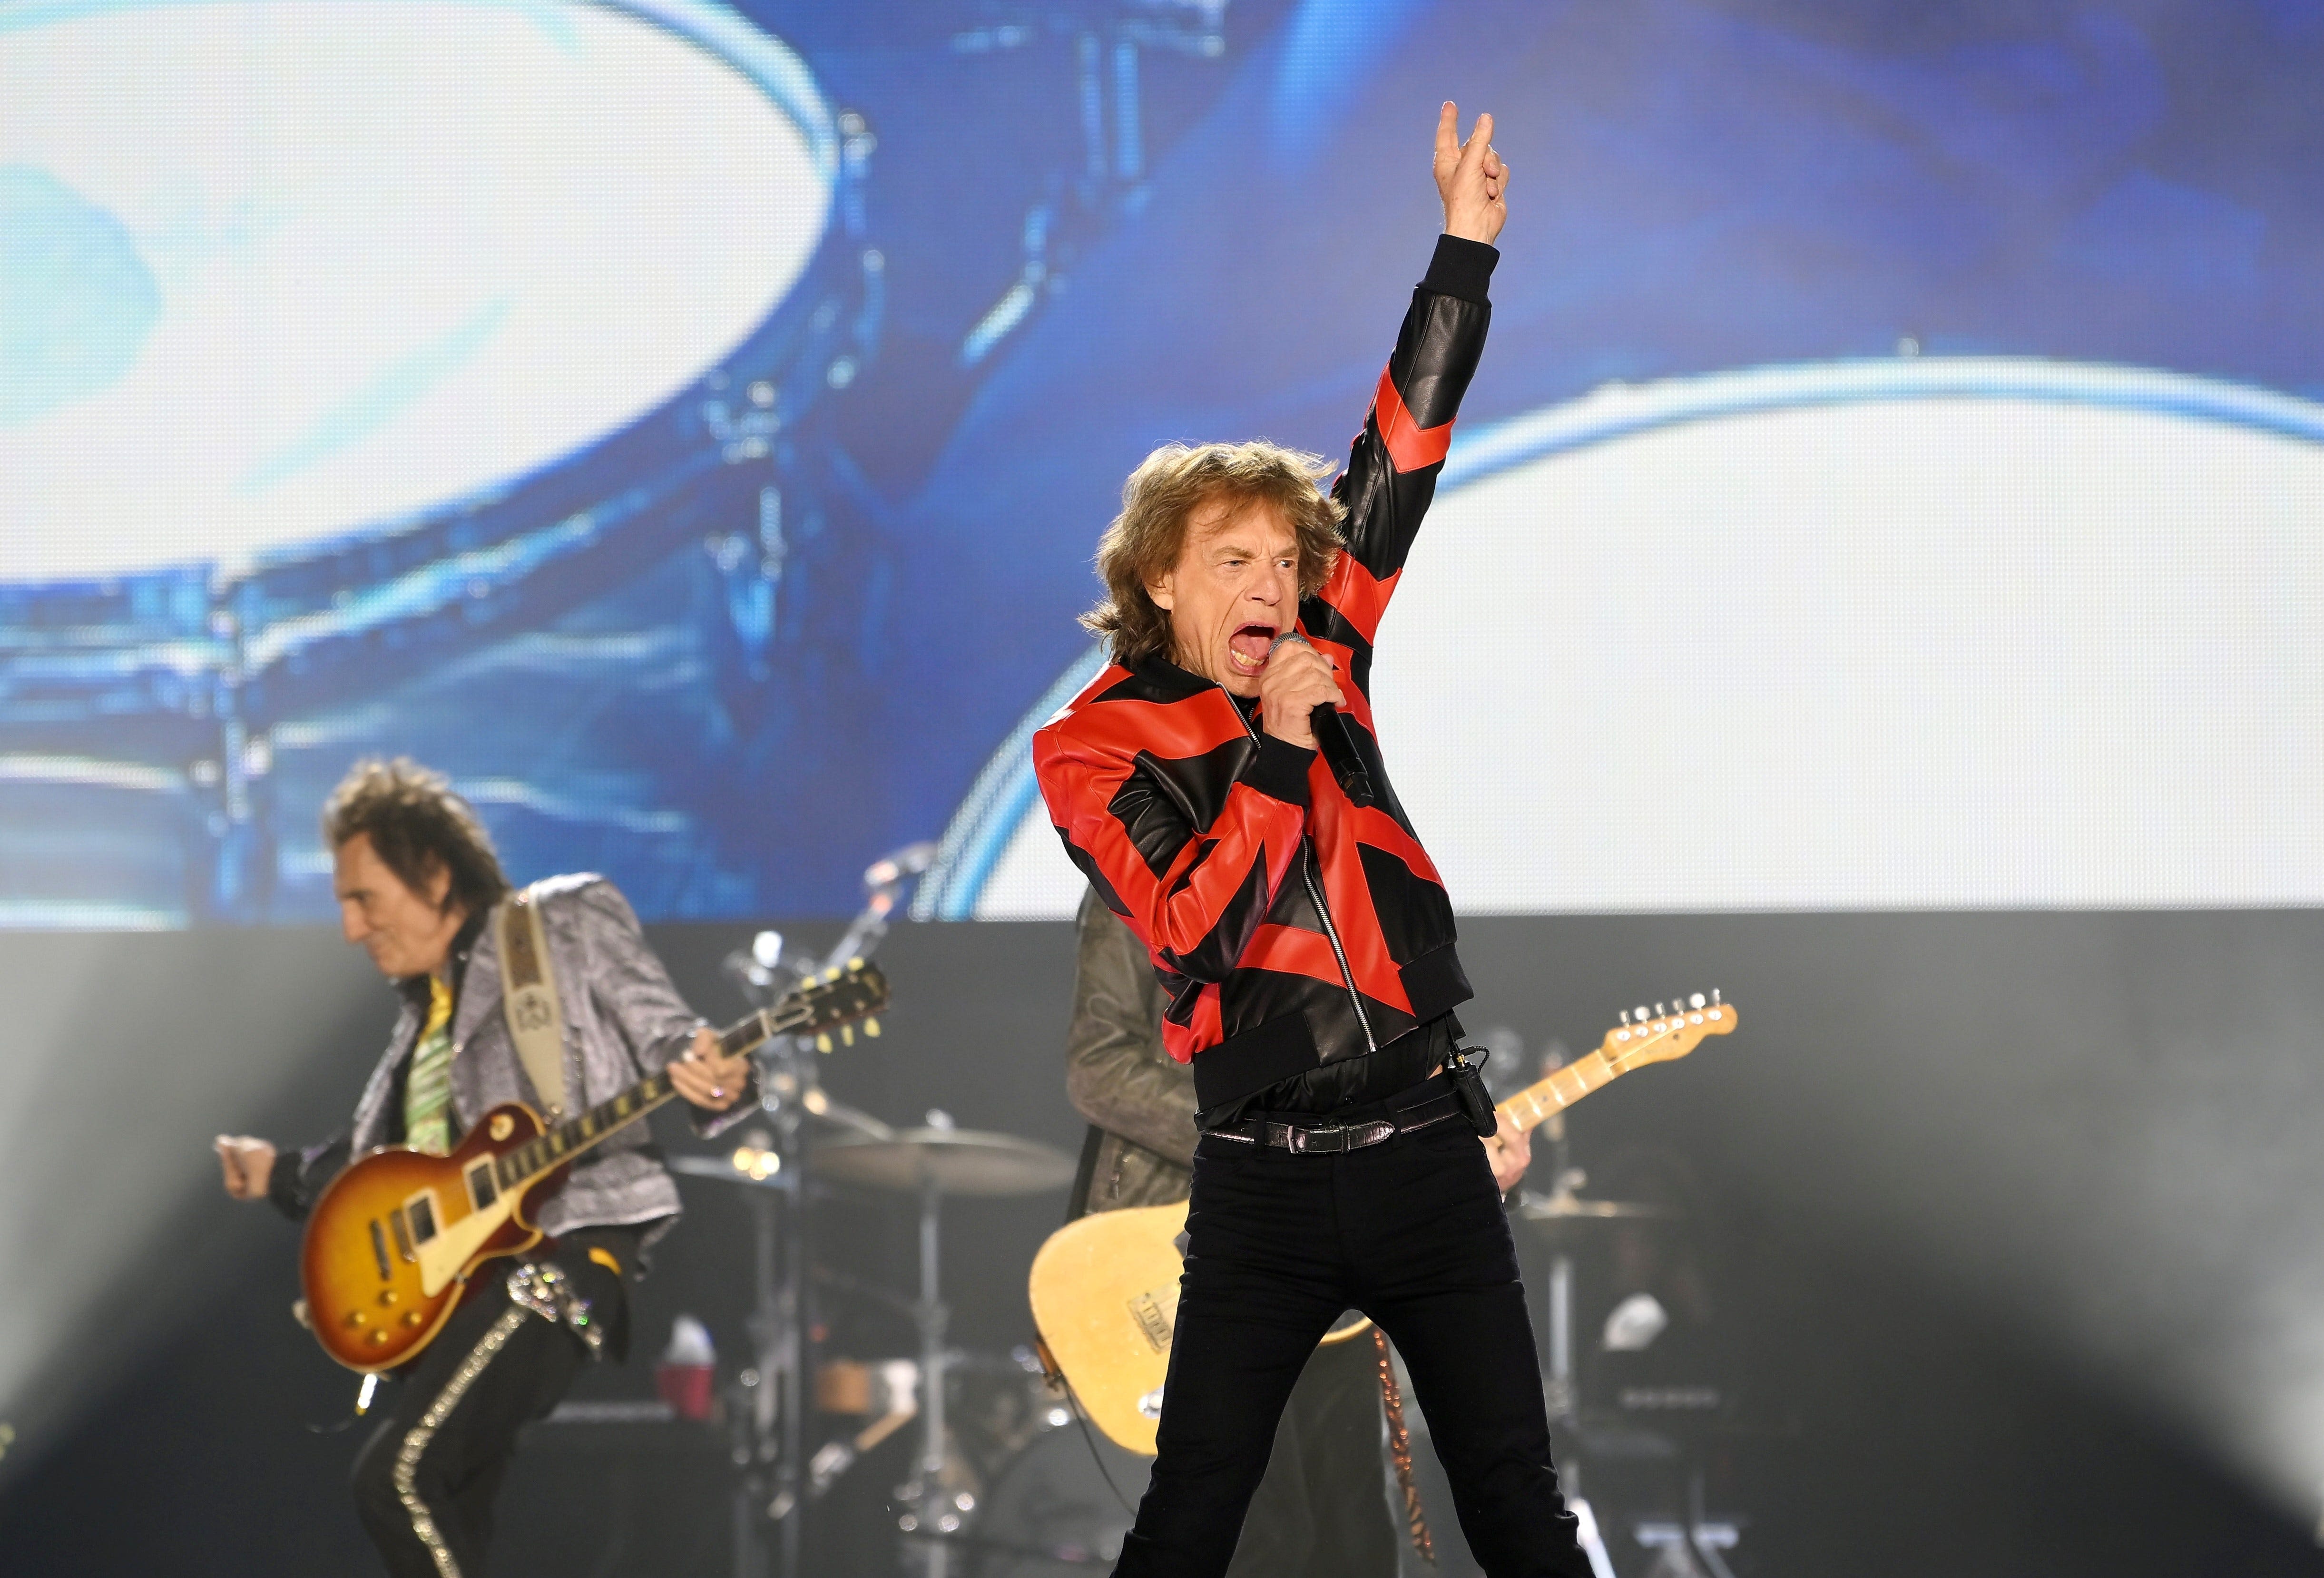 Not just Jagger: Big-name musical artists have praised, dissed DeSantis